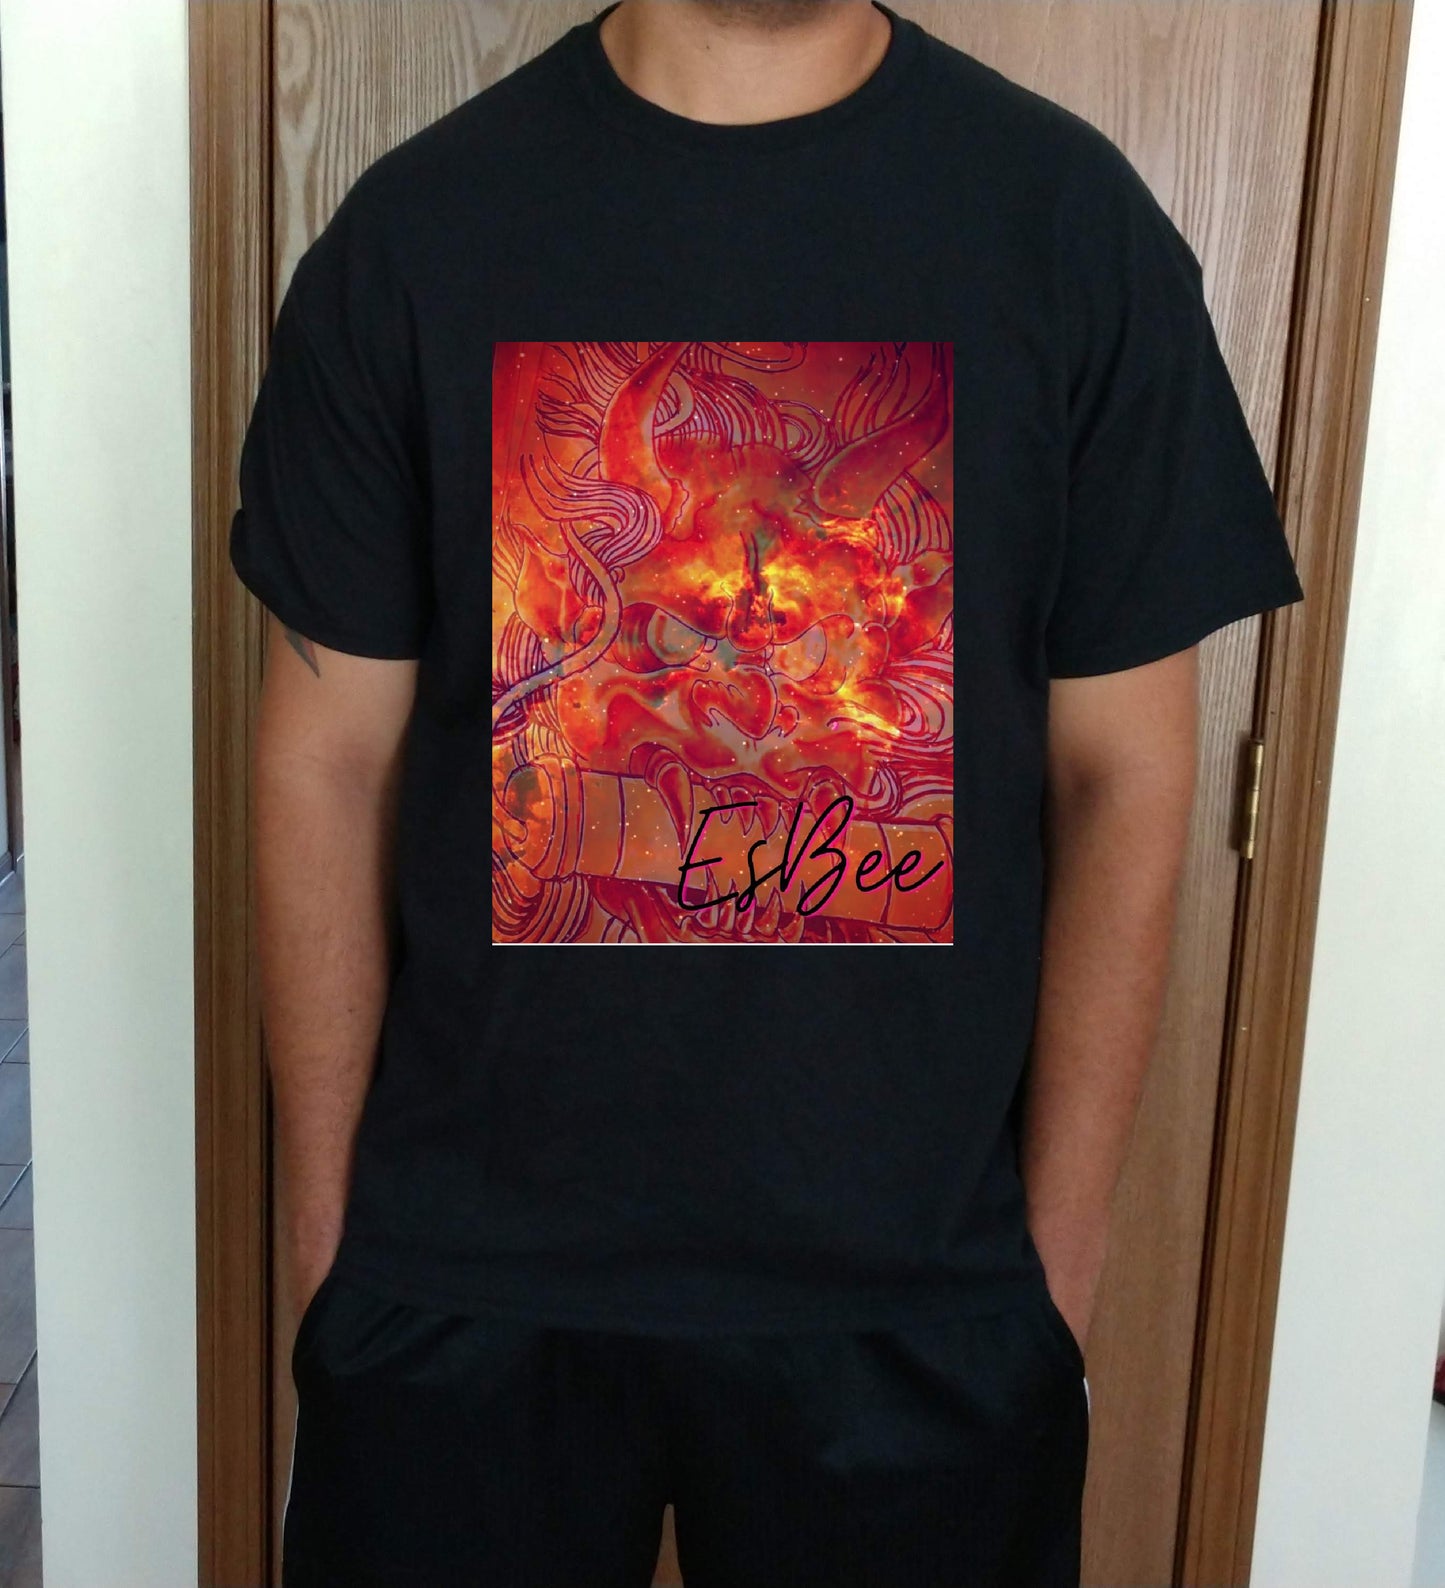 Goth Aesthetic Shirt, Goth Shirt, Halloween Shirt, Abstract Goth